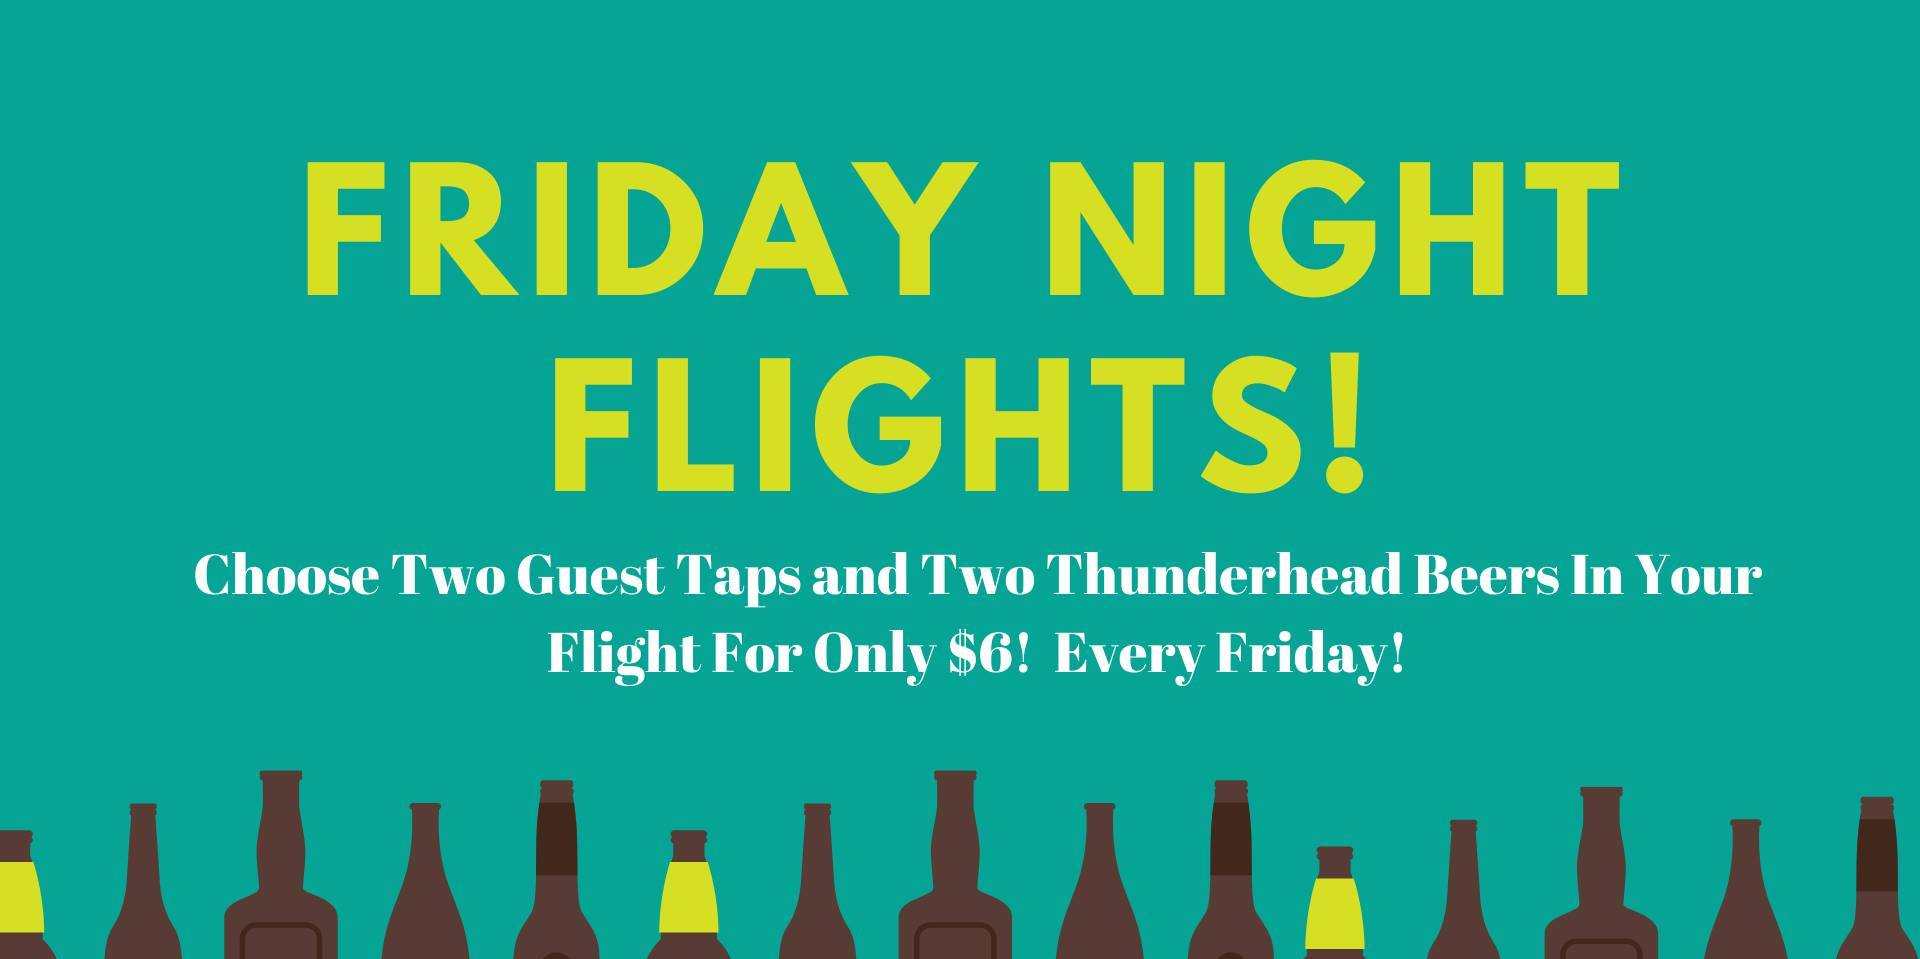 Friday Night Flights promotional image